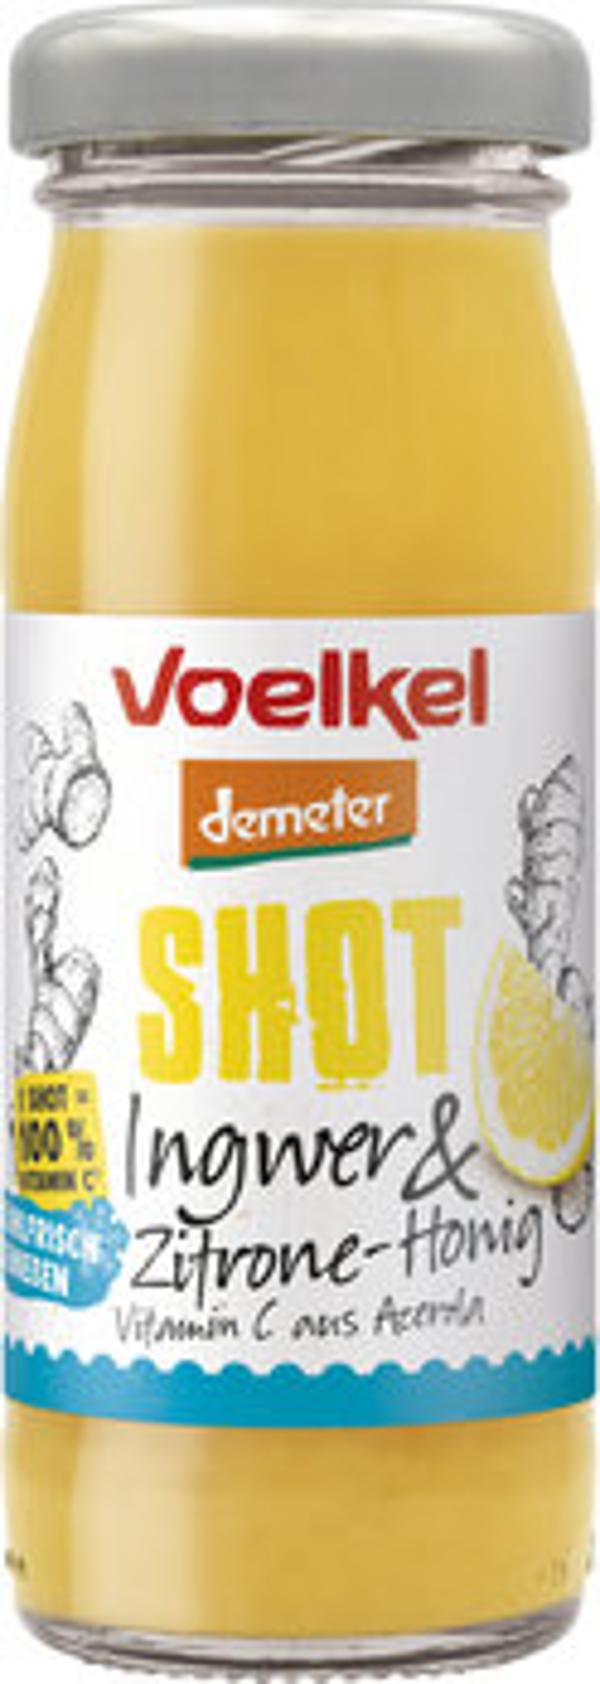 Produktfoto zu Shot Ingwer & Zitrone-Honig, 95 ml